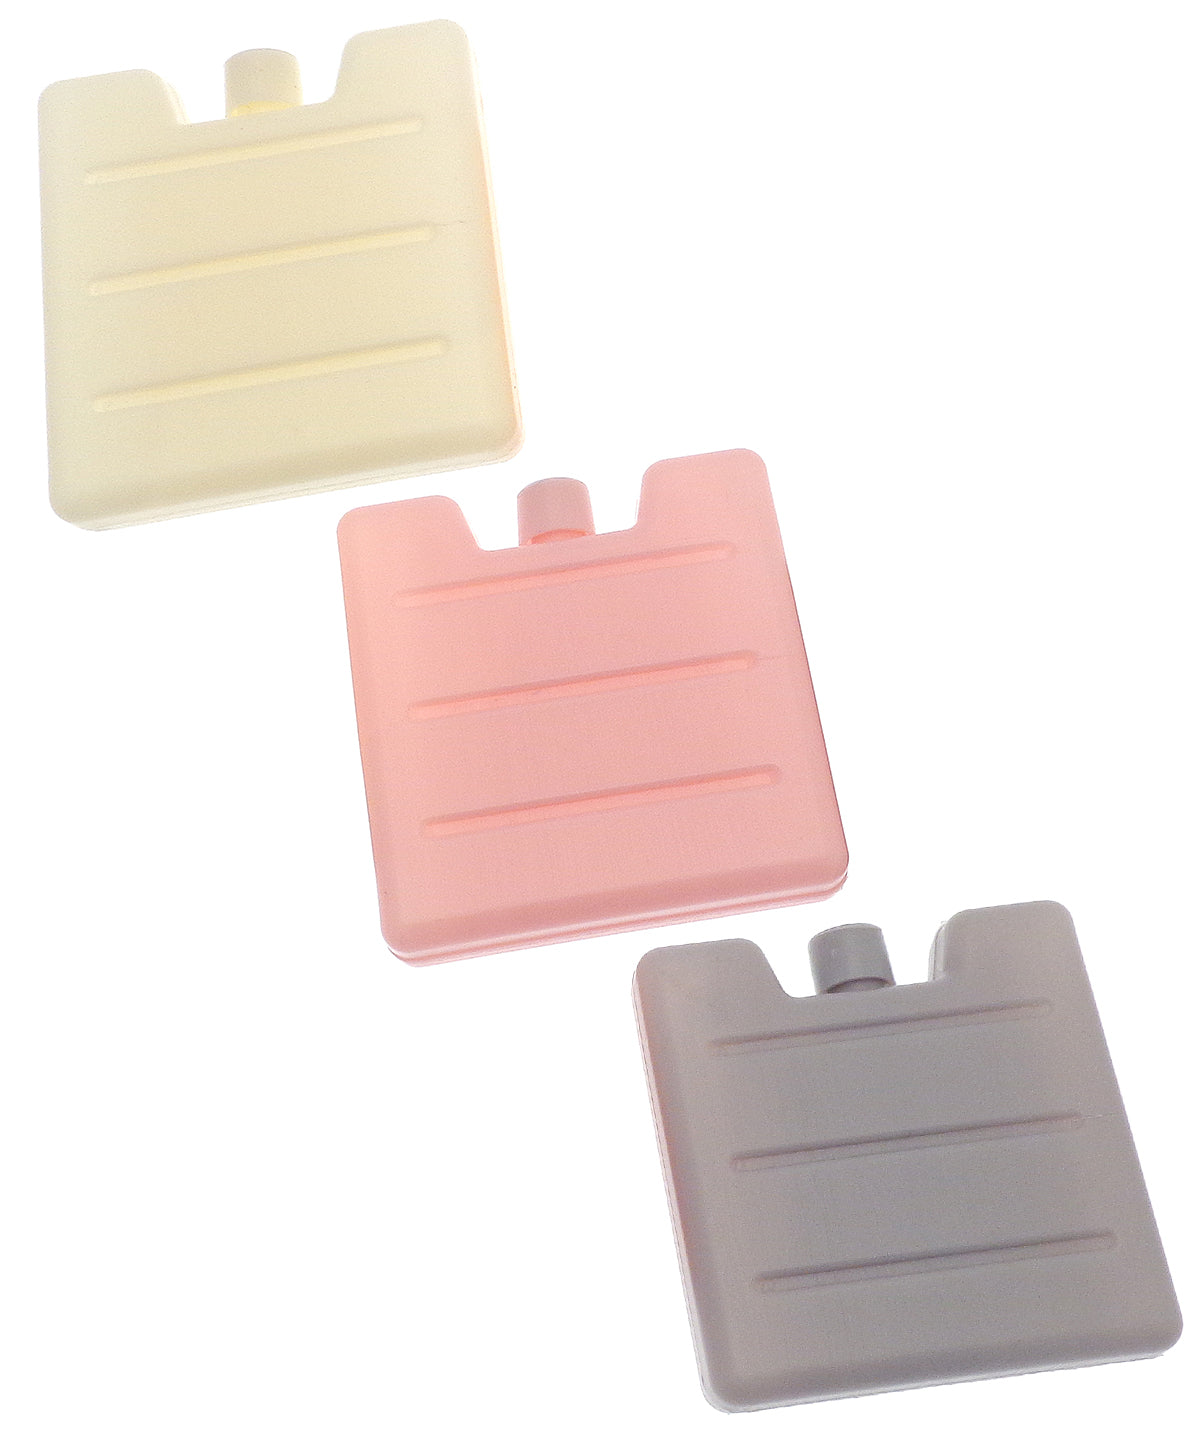 Medium freezer blocks (3-pack)